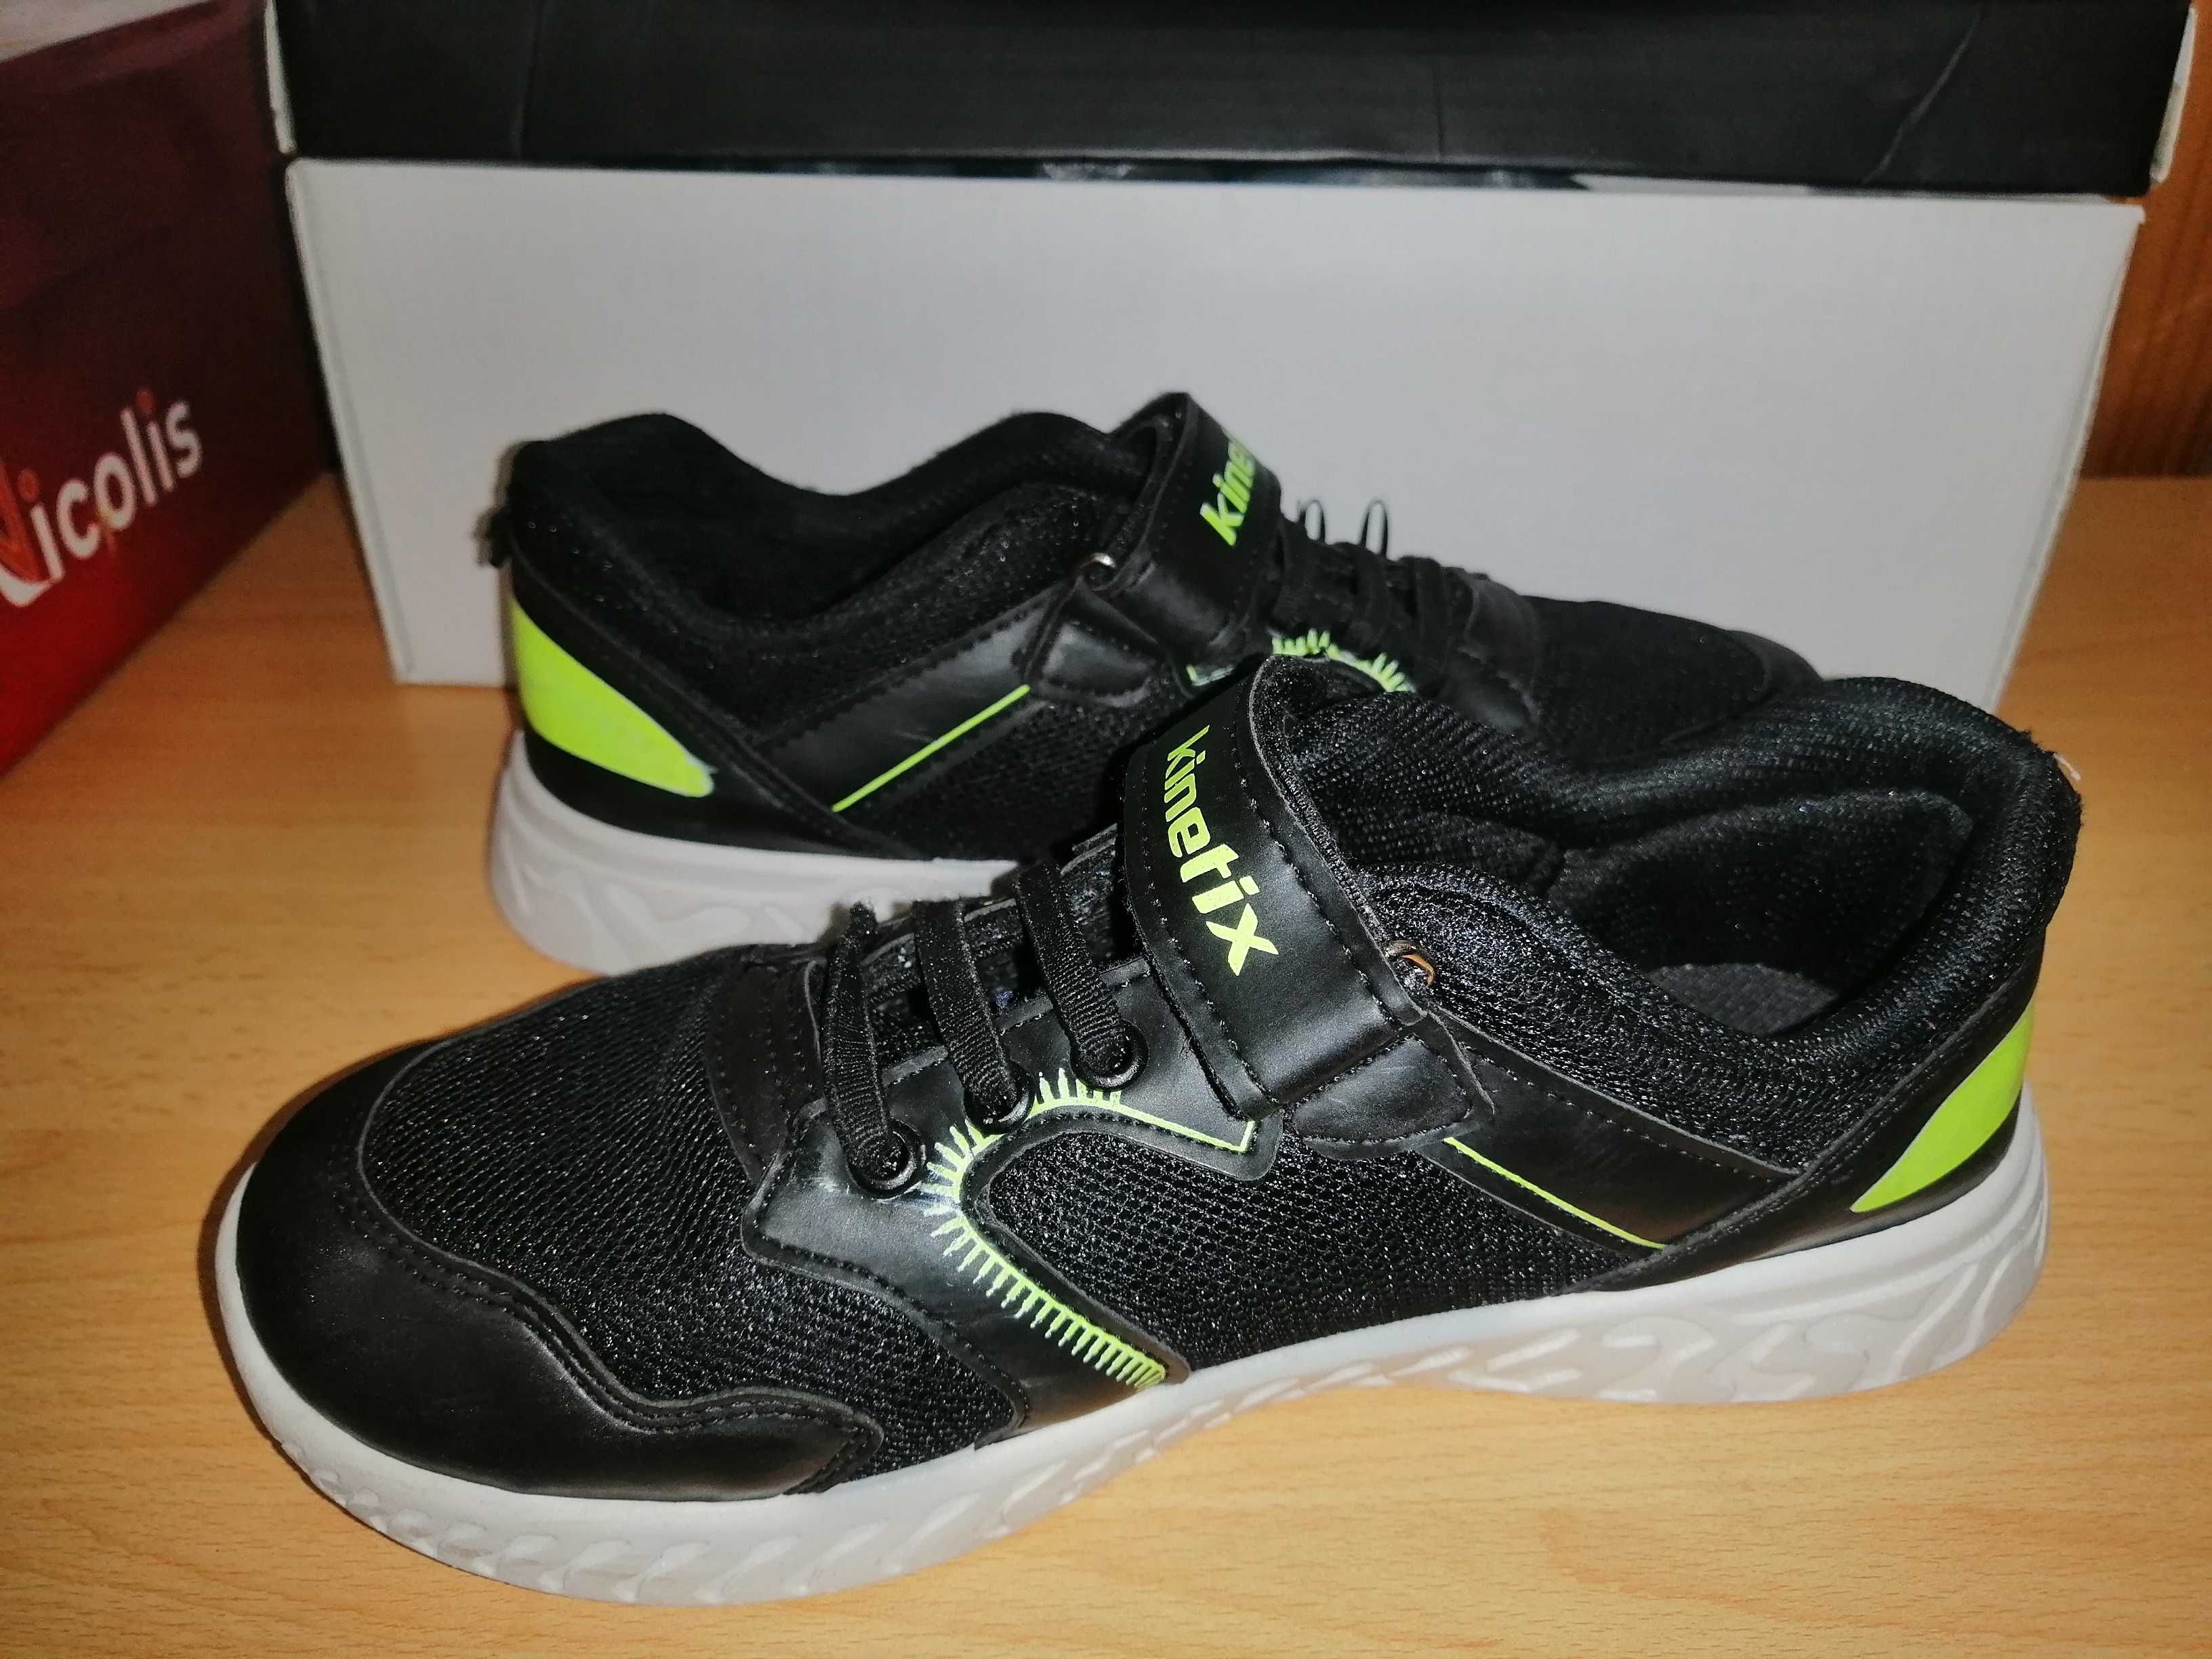 Adidasi/pantofi sport Kinetix cu scai